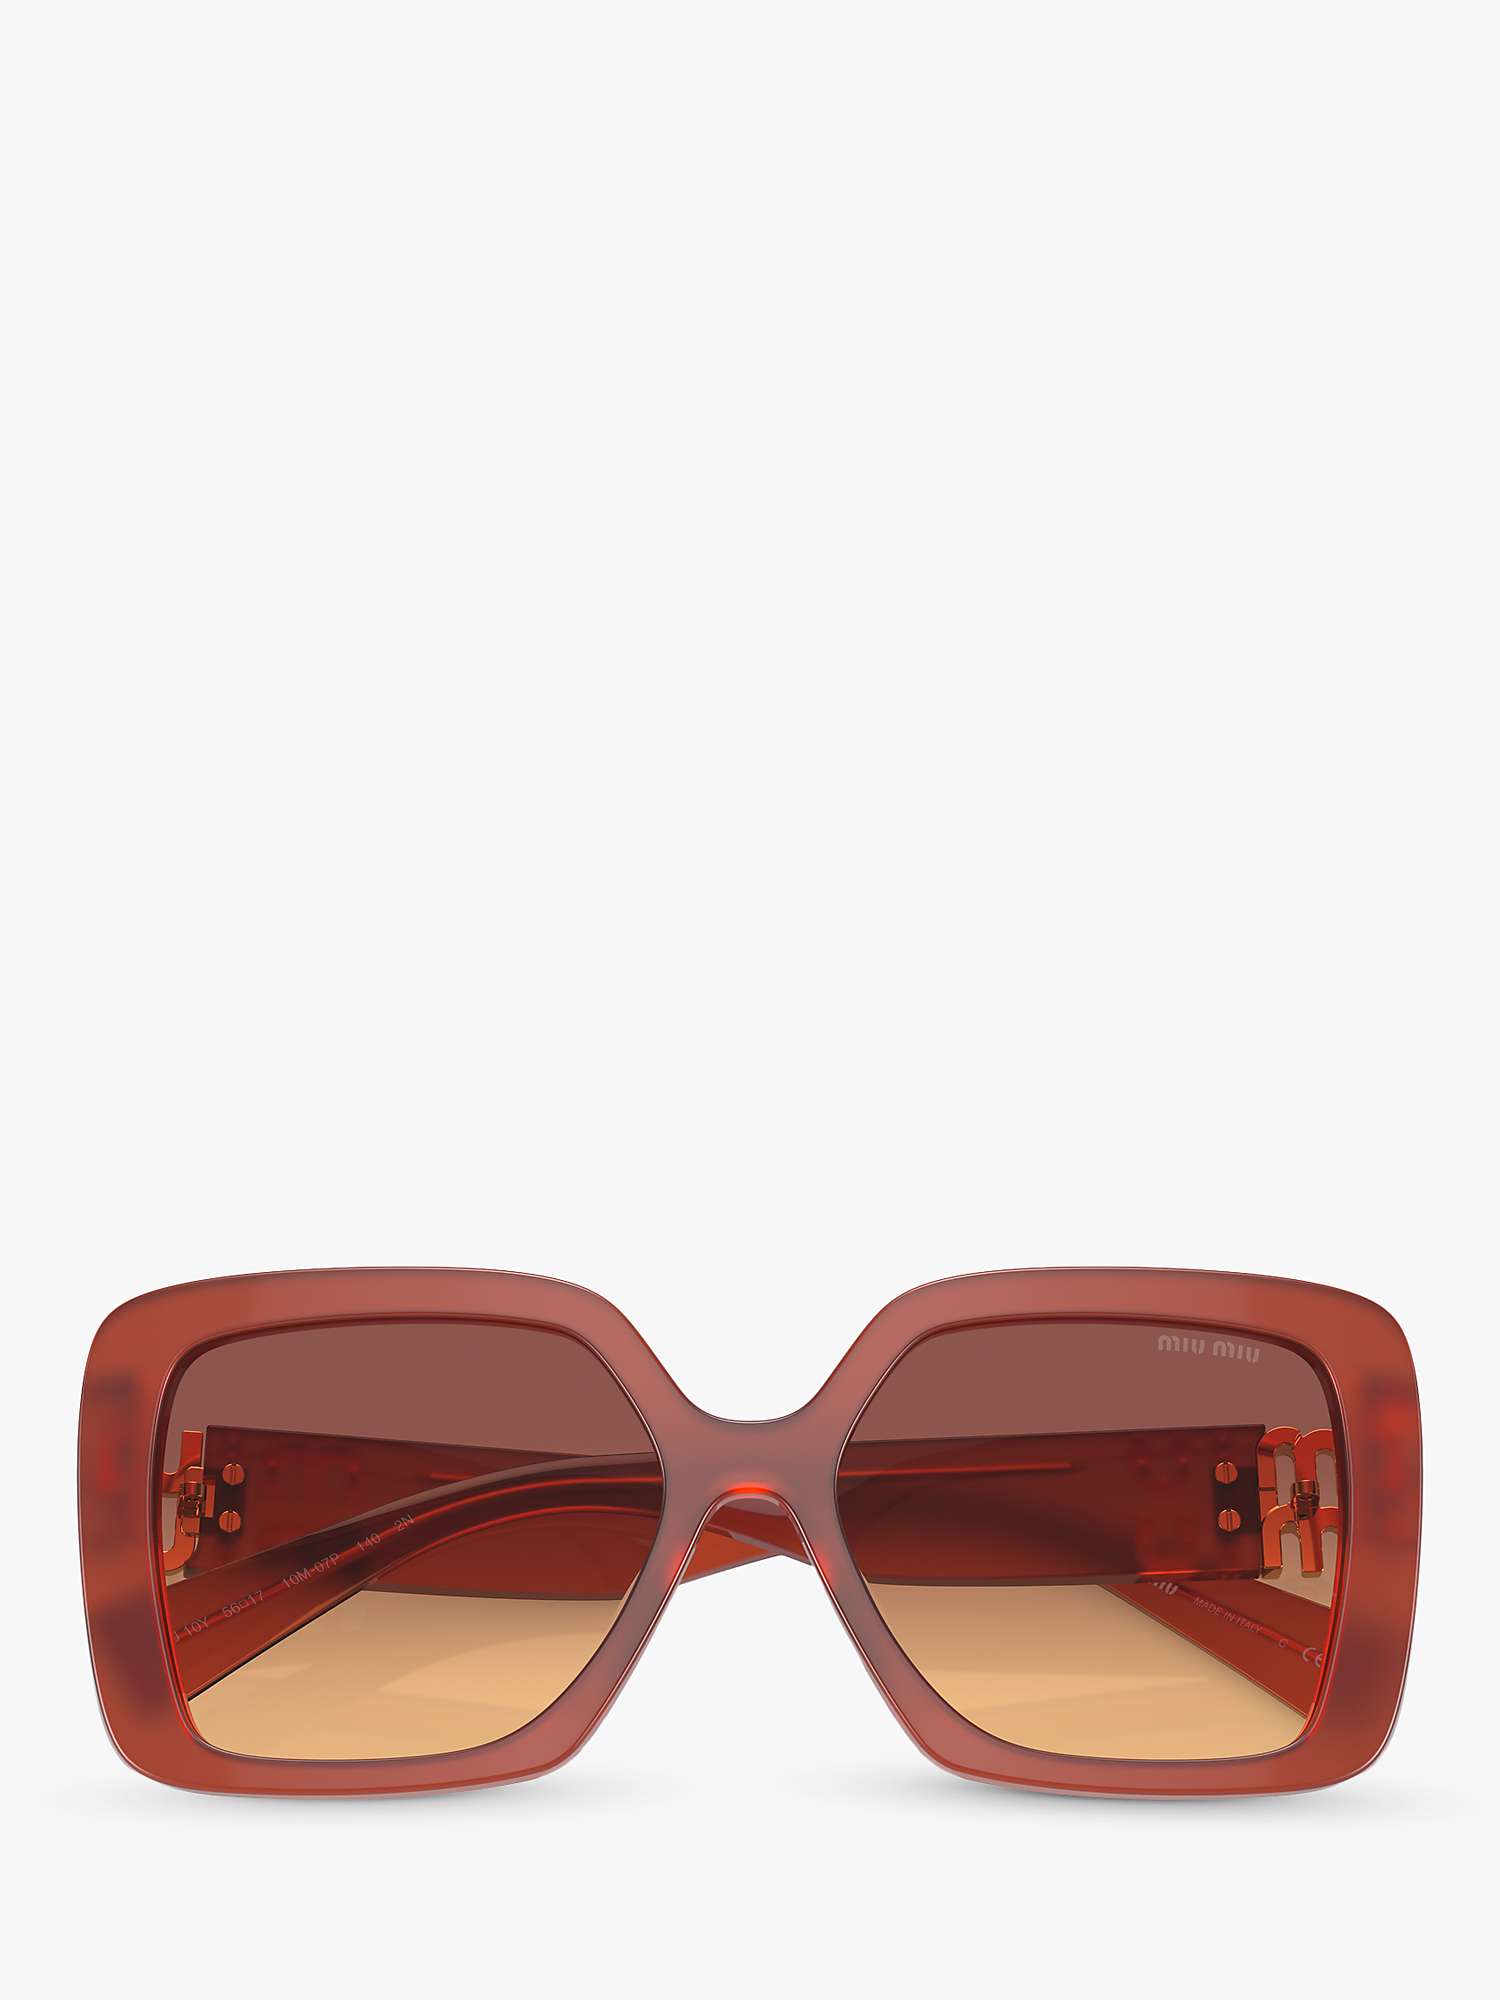 Buy Miu Miu MU 10YS Women's Chunky Square Sunglasses, Cognac Opal/Brown Gradient Online at johnlewis.com